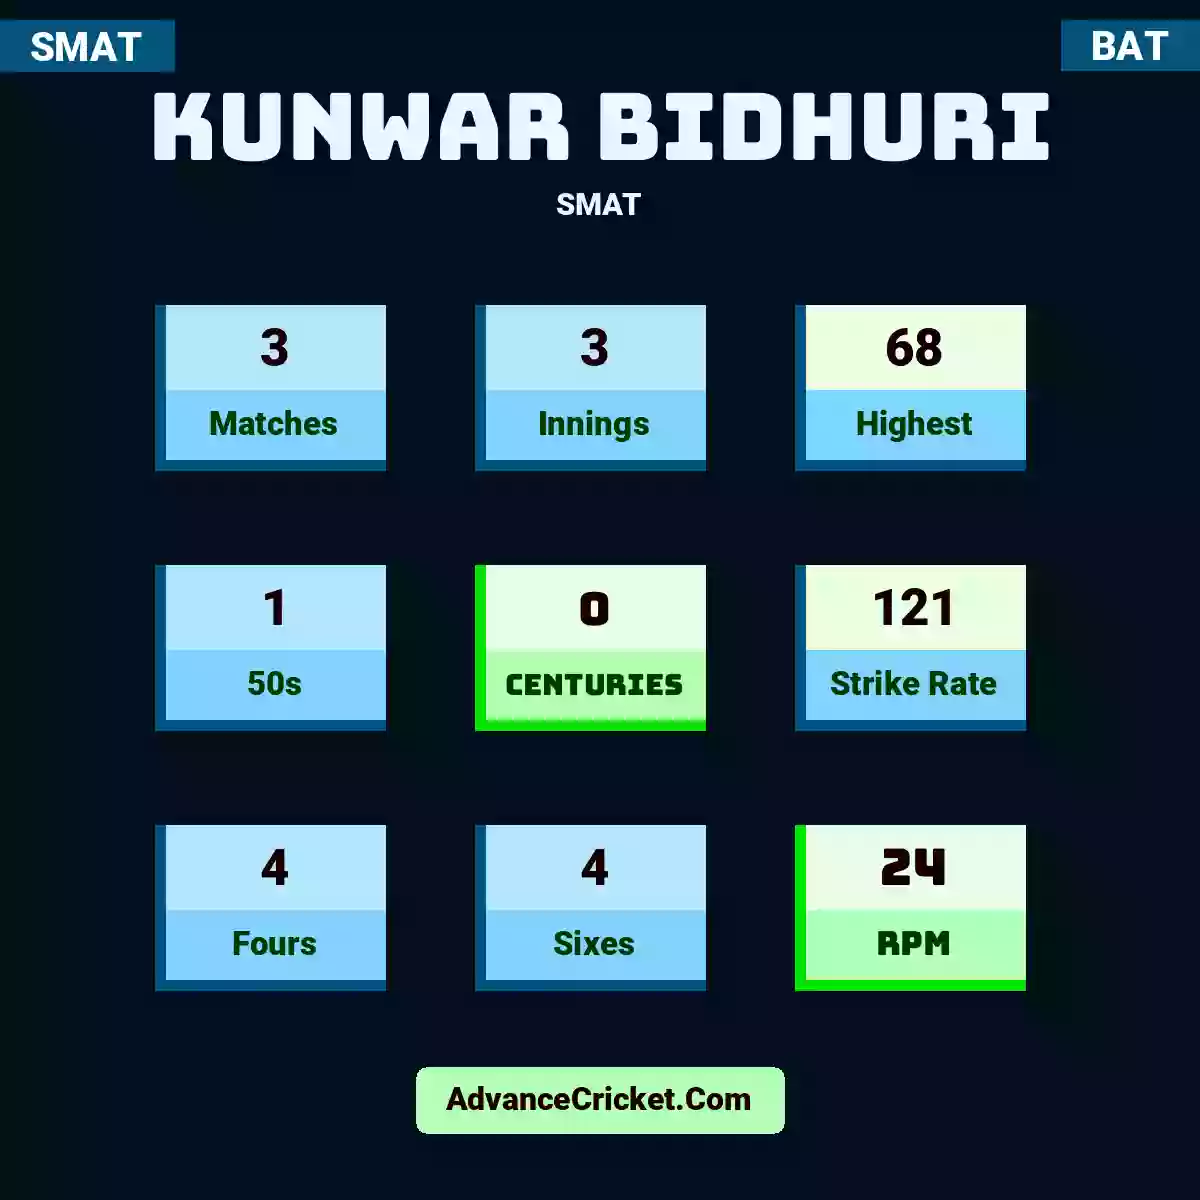 Kunwar Bidhuri SMAT , Kunwar Bidhuri played 3 matches, scored 68 runs as highest, 1 half-centuries, and 0 centuries, with a strike rate of 121. K.Bidhuri hit 4 fours and 4 sixes, with an RPM of 24.